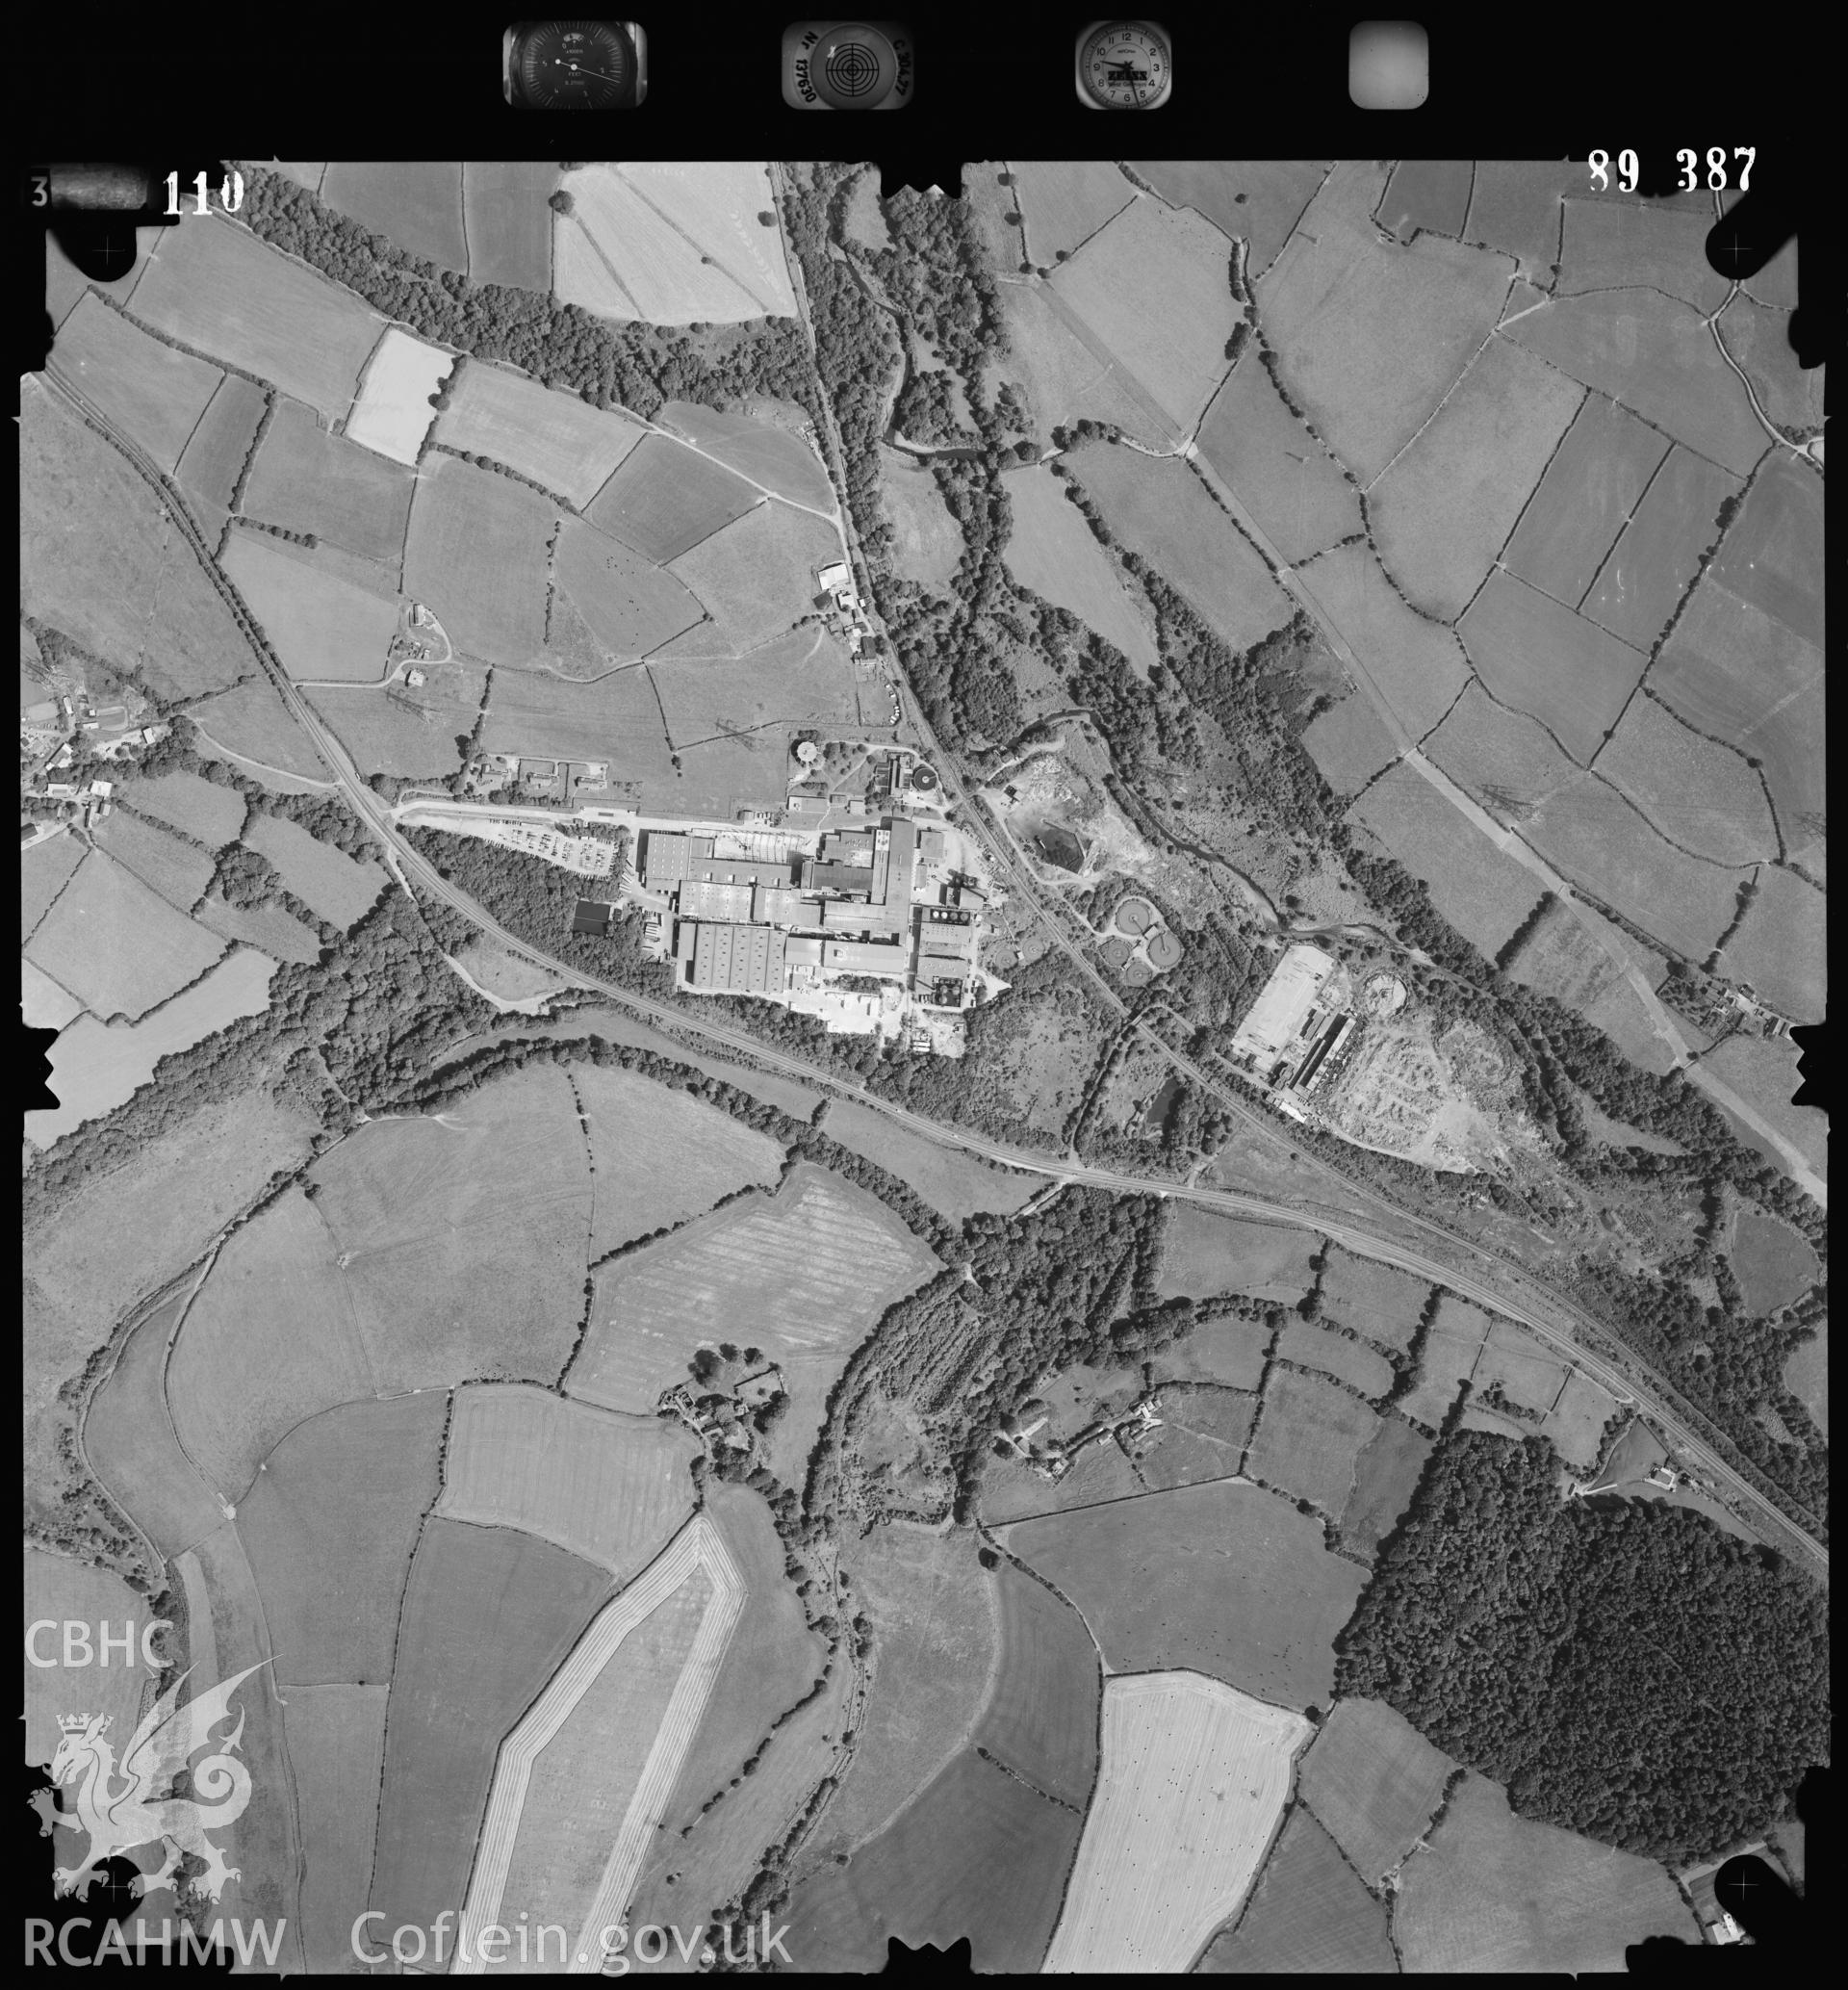 Digitized copy of an aerial photograph showing Bridgend Paper Mill,  taken by Ordnance Survey, 1989.